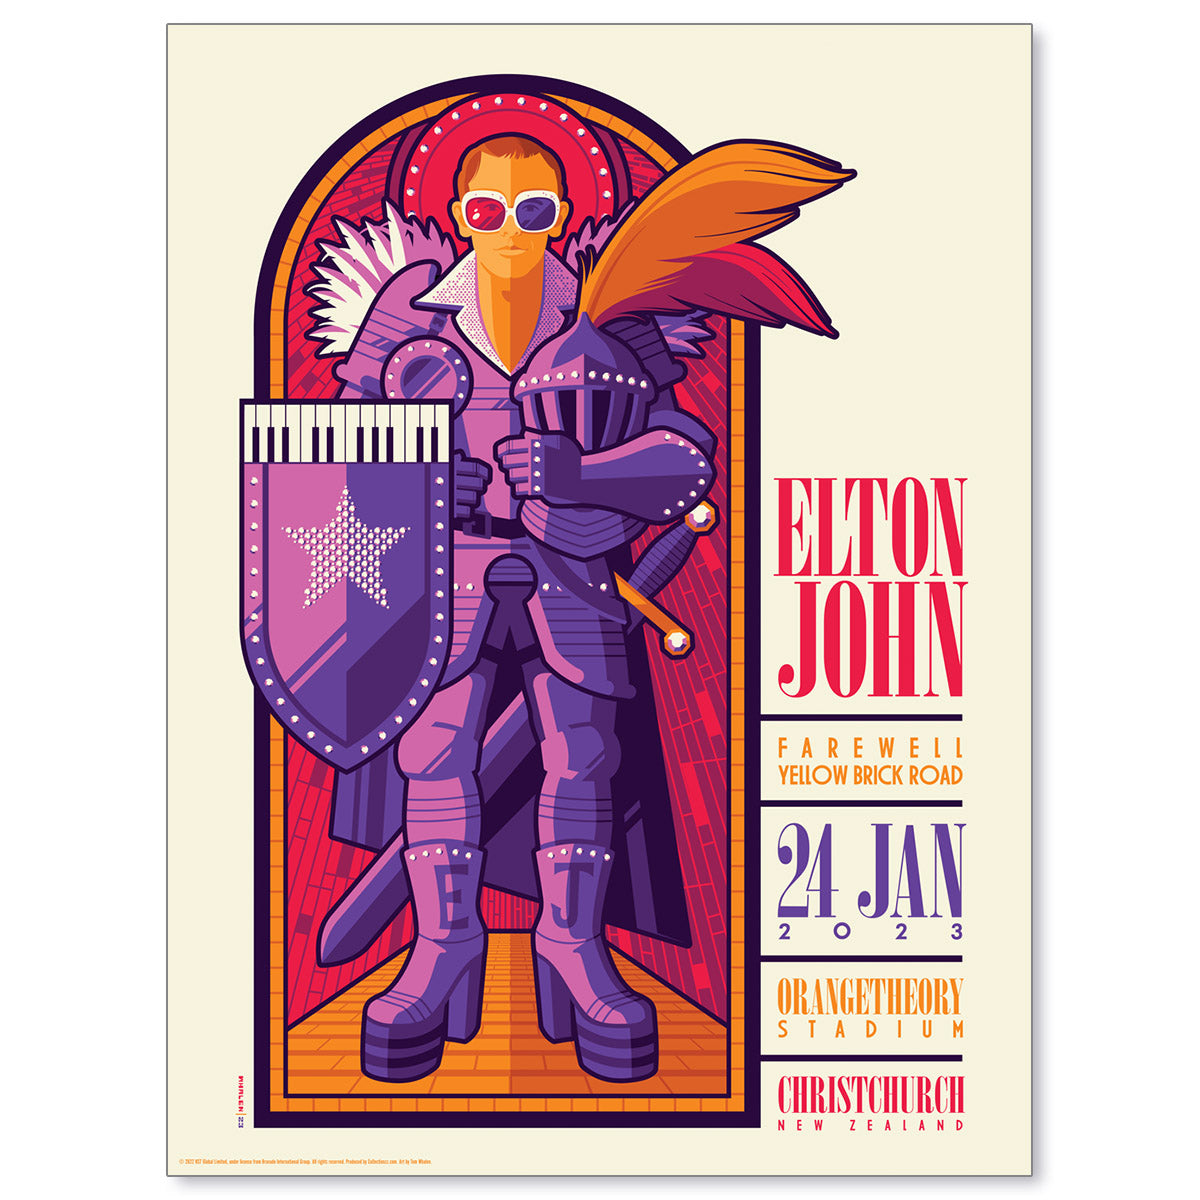 Elton John Christchurch Farewell Yellow Brick Road Tour January 24, 2023